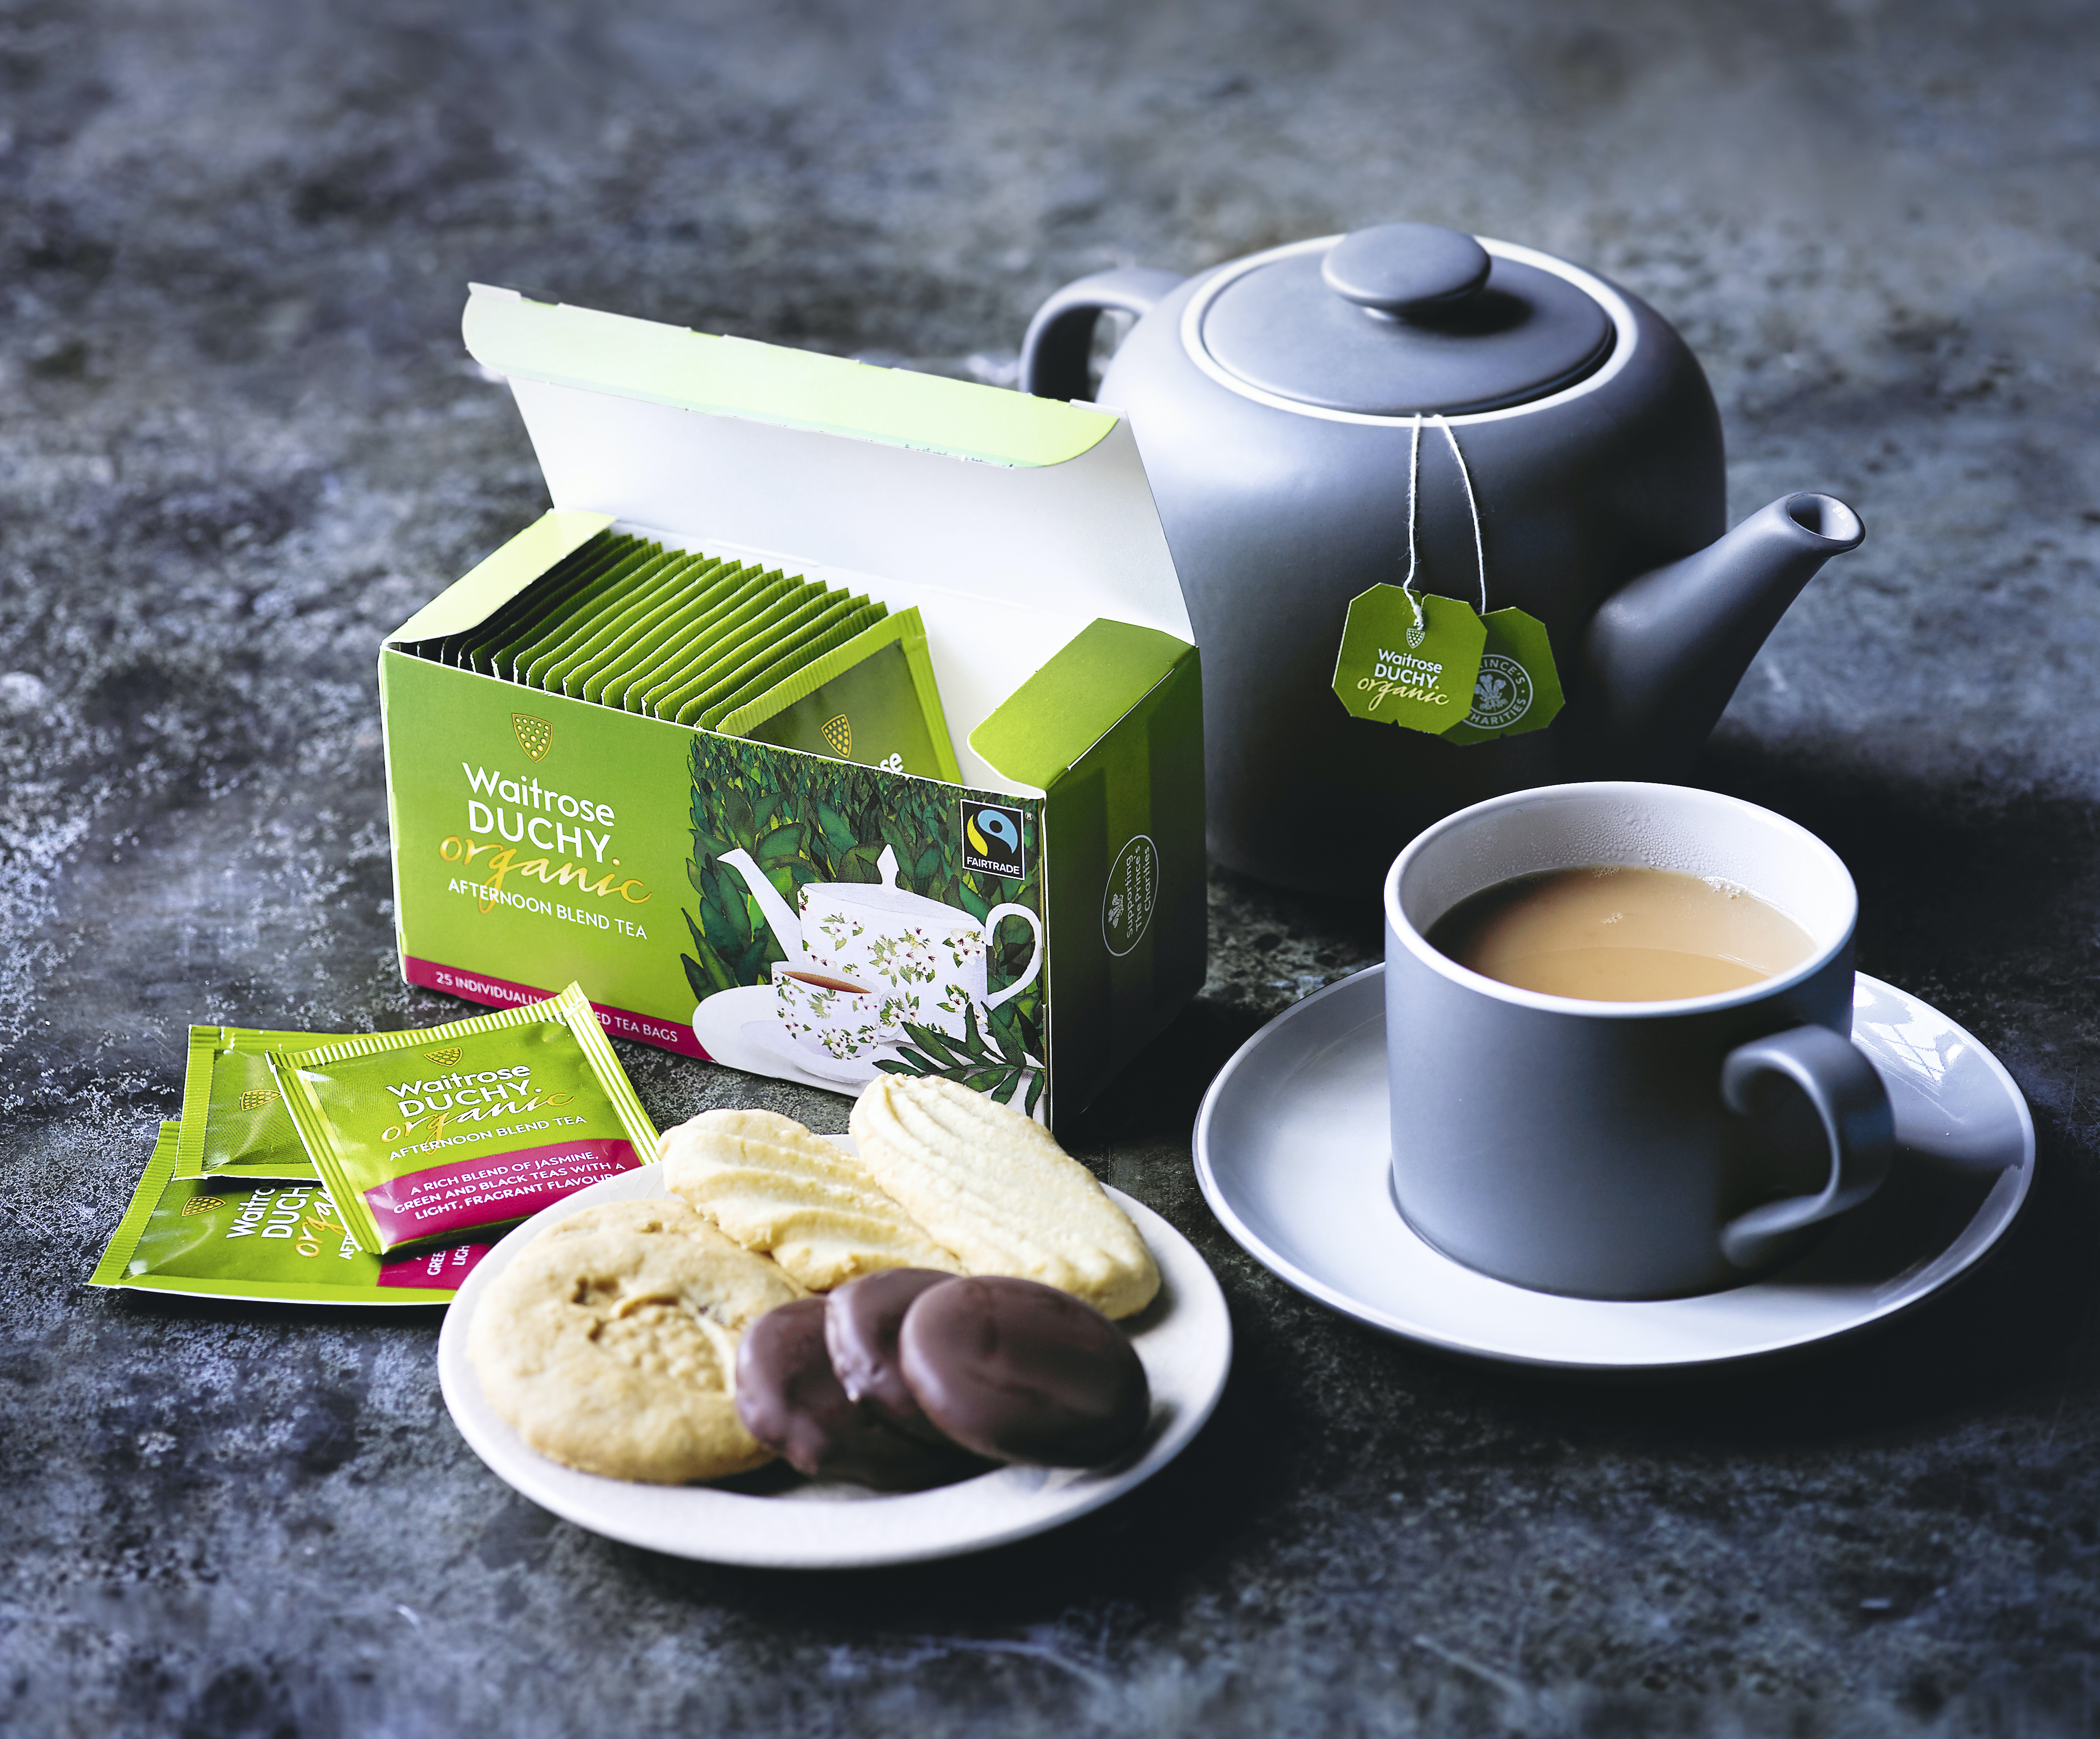 Waitrose Duchy Organic tea and biscuits